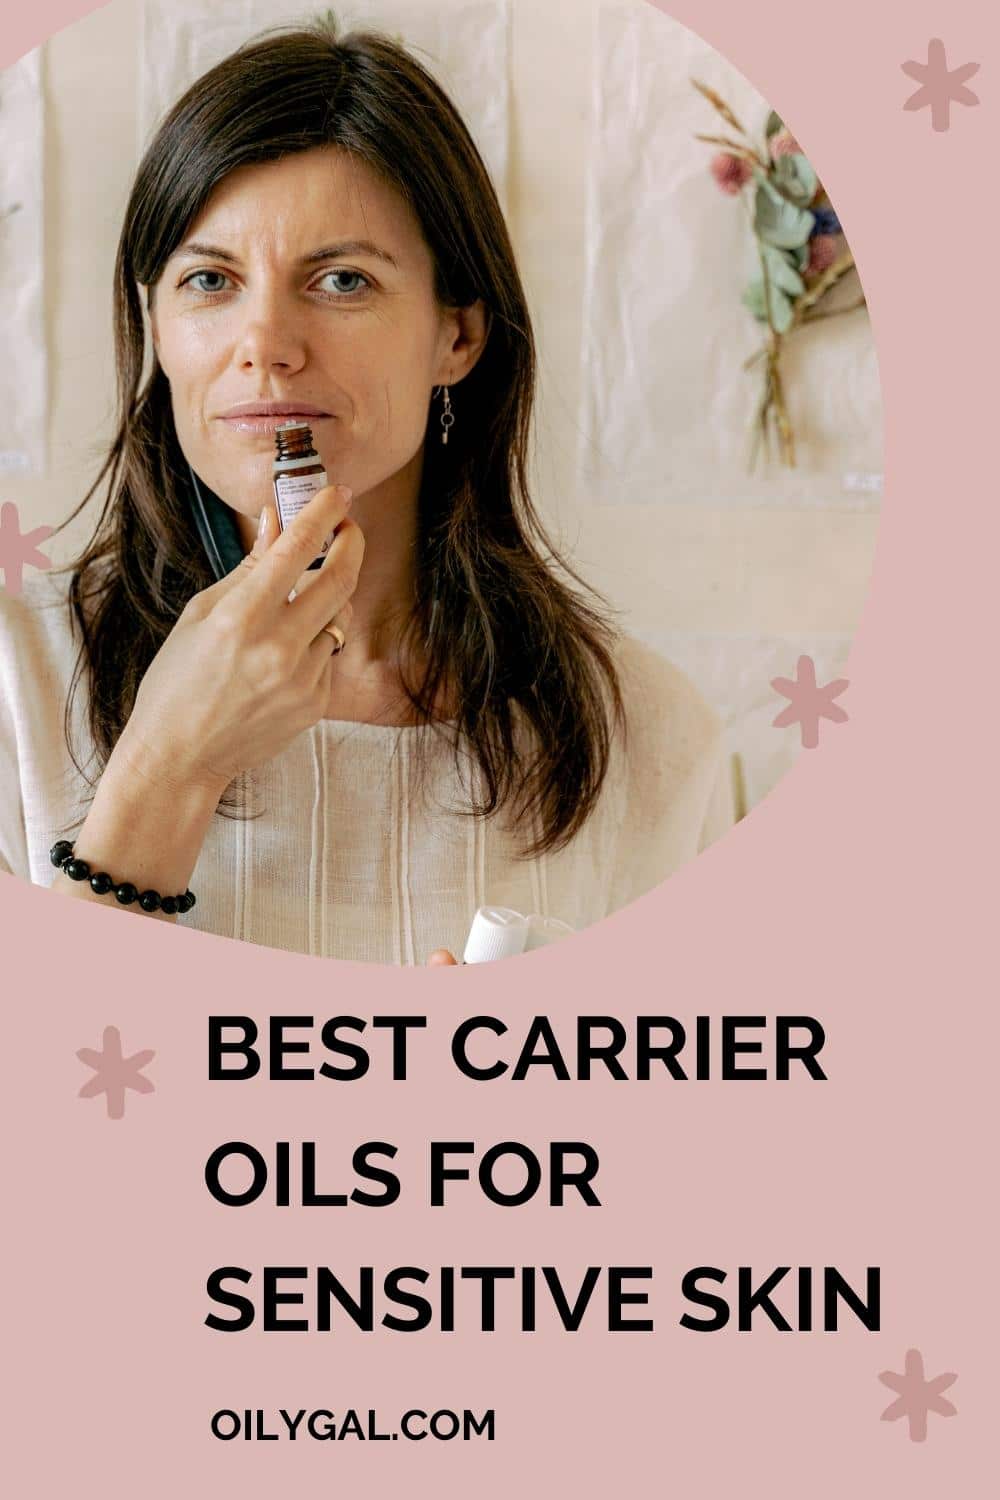 Best Carrier Oils for Sensitive Skin